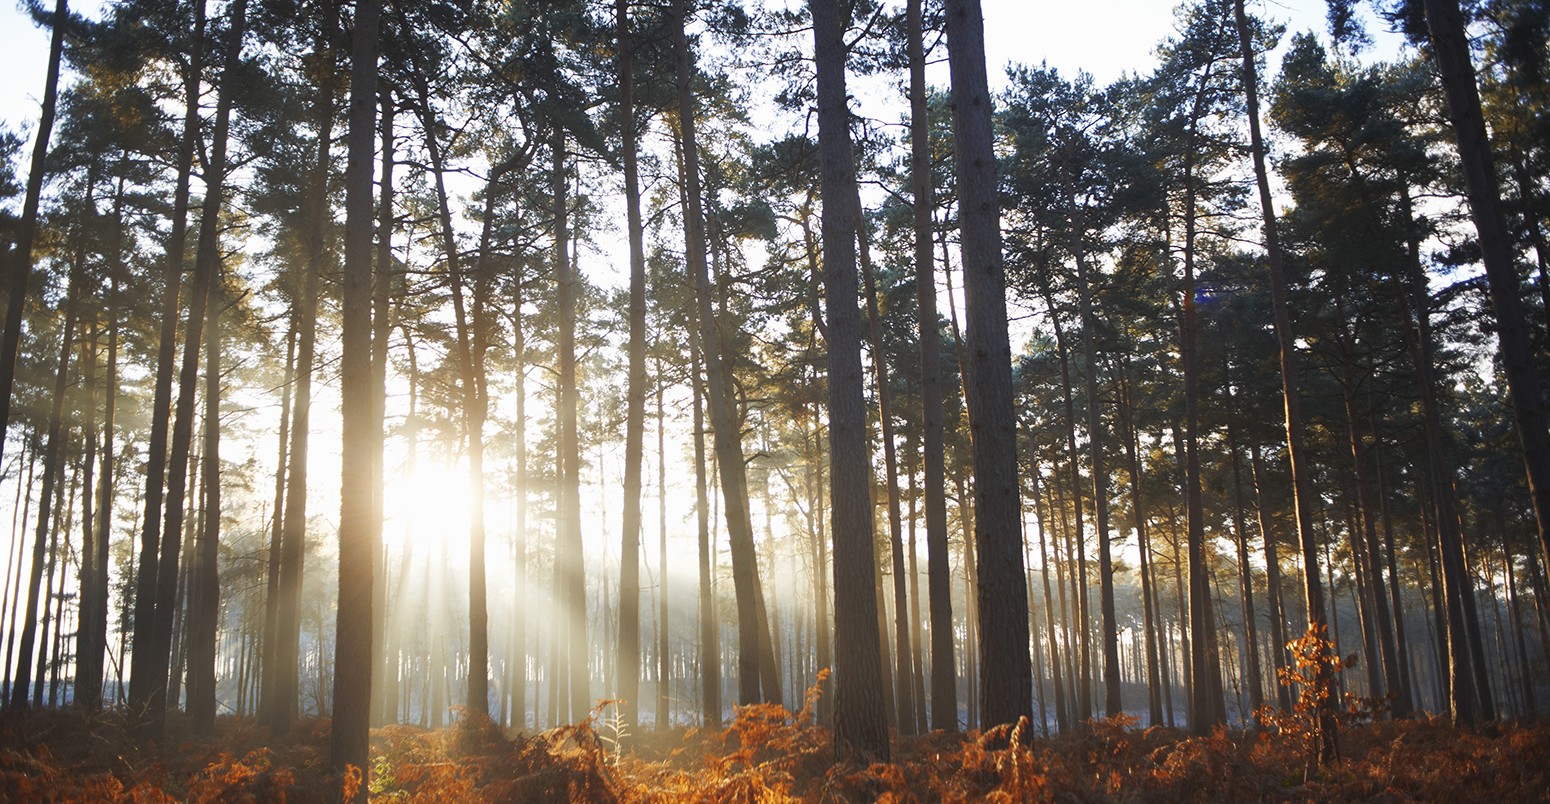 Sunlight through winter forest in Surrey, England